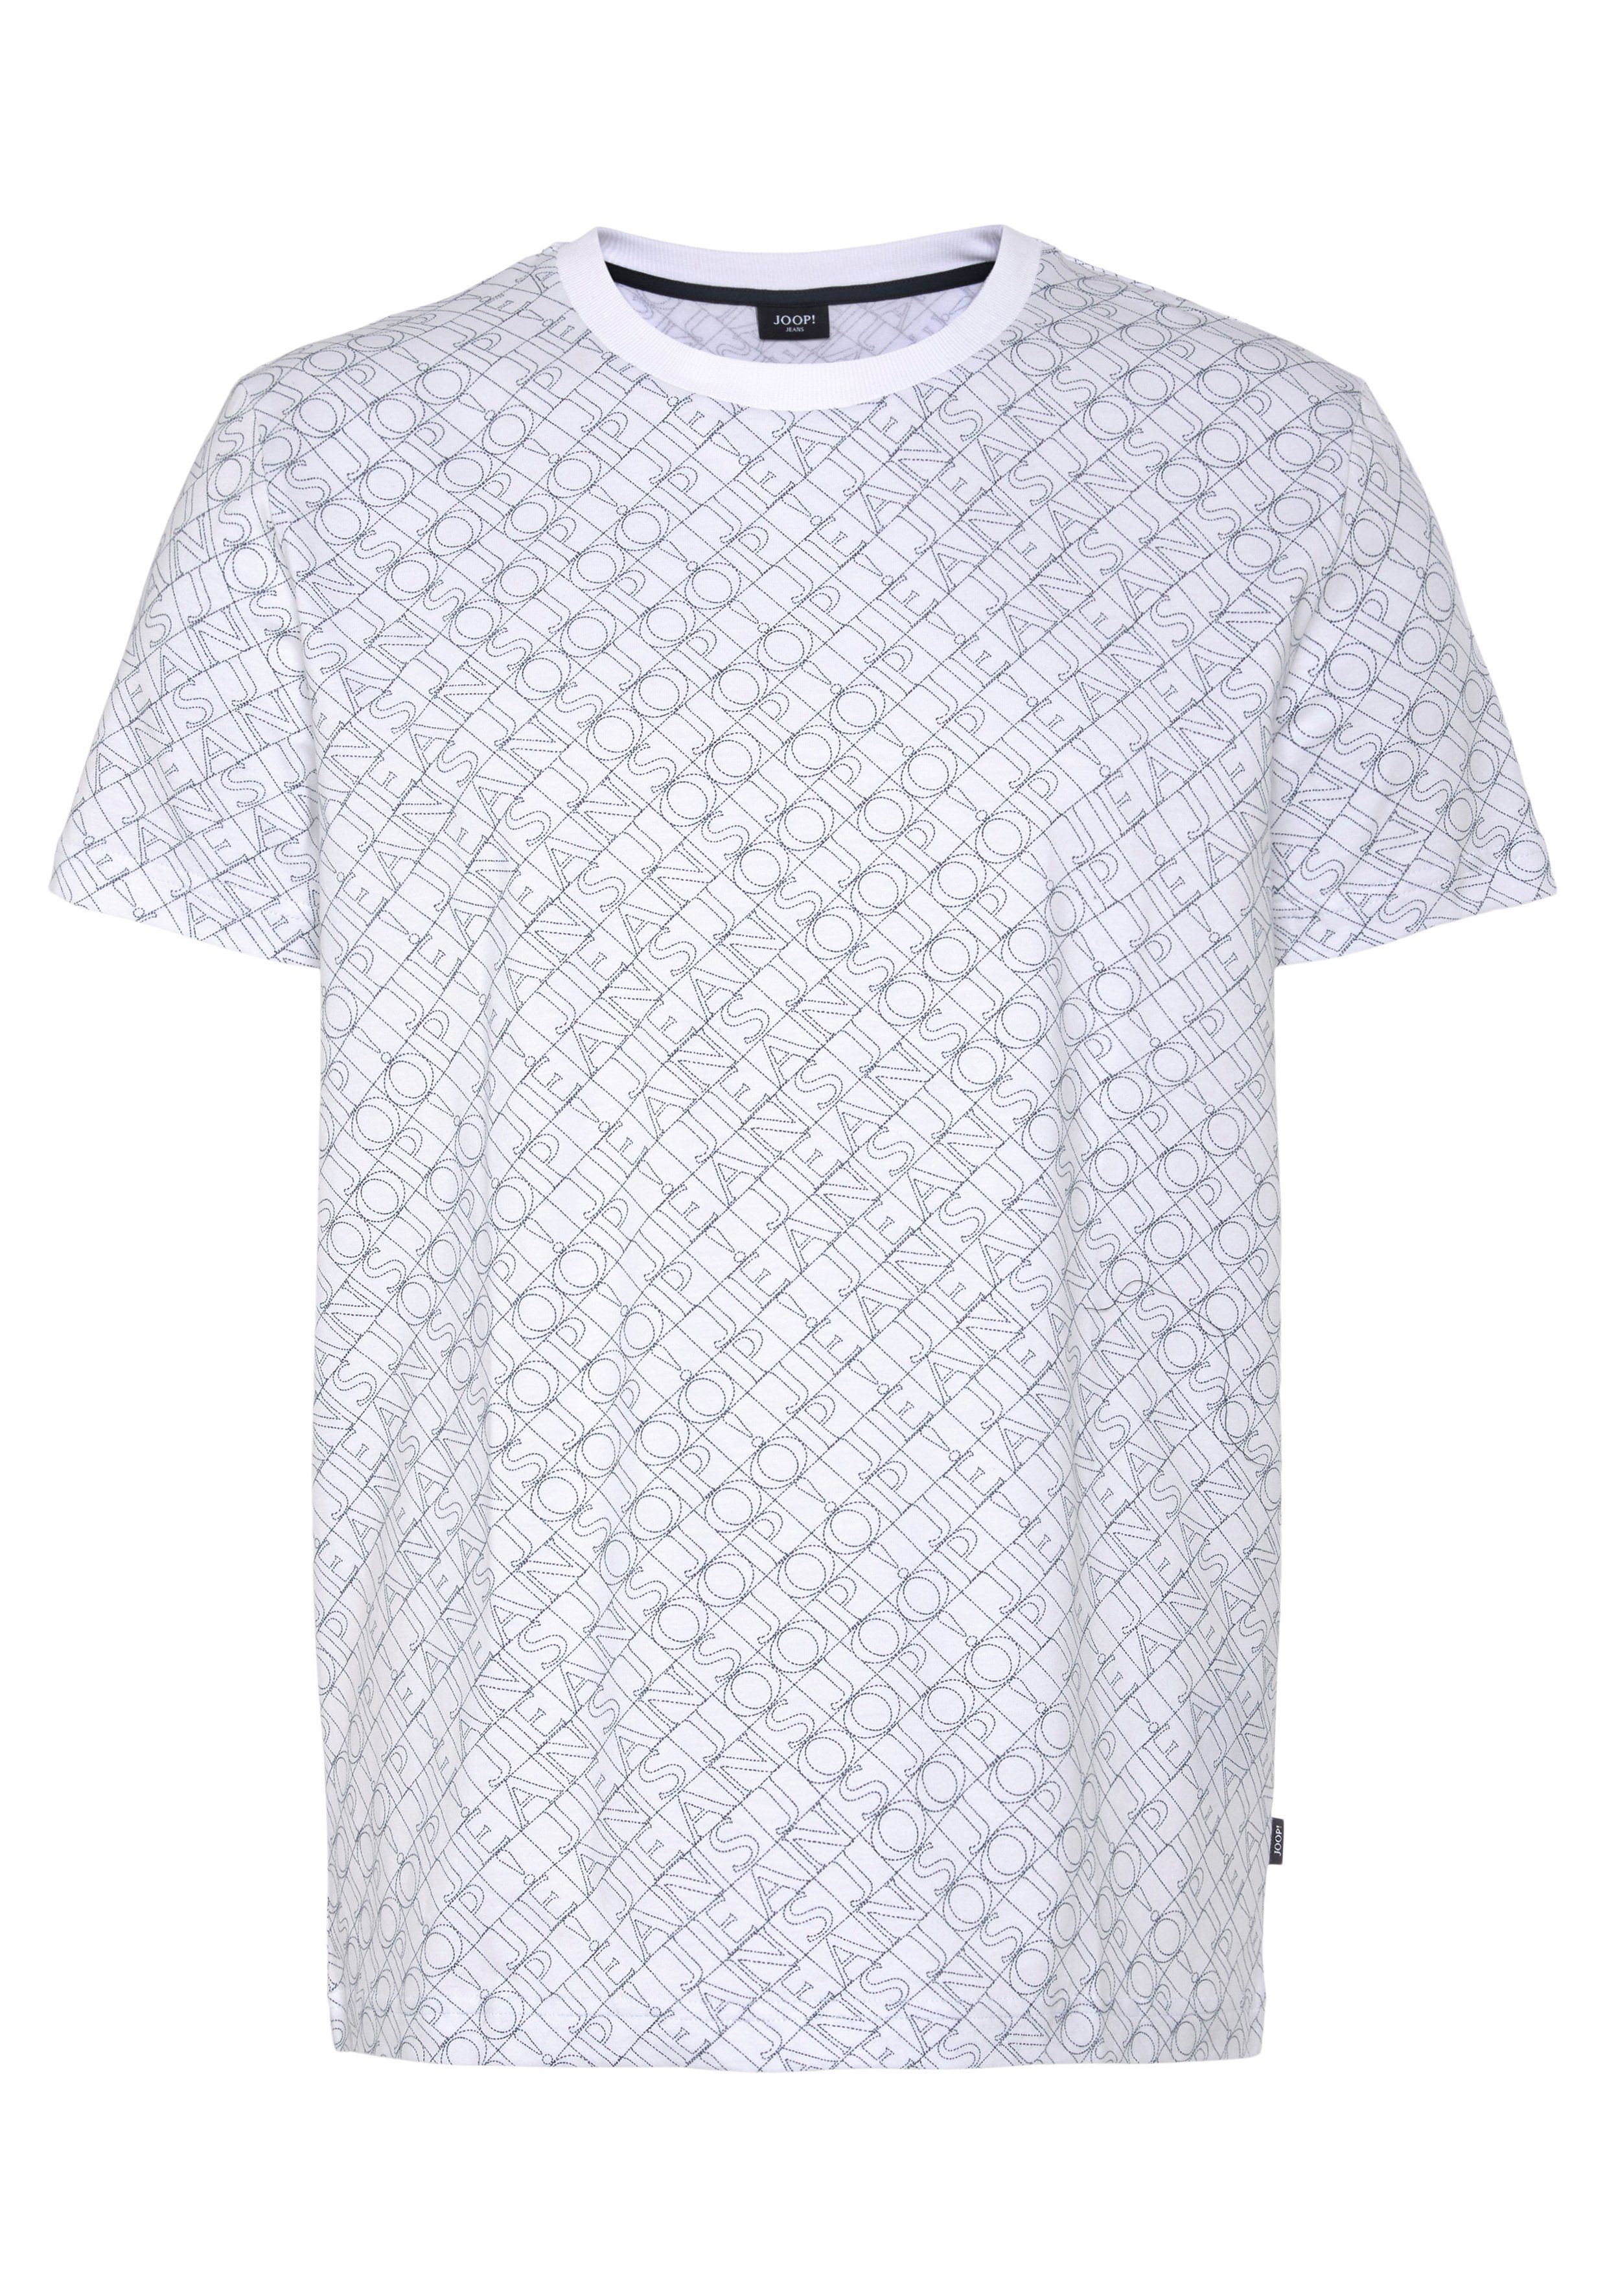 Joop Jeans T-Shirt mit allover Logoprint weiß gemustert